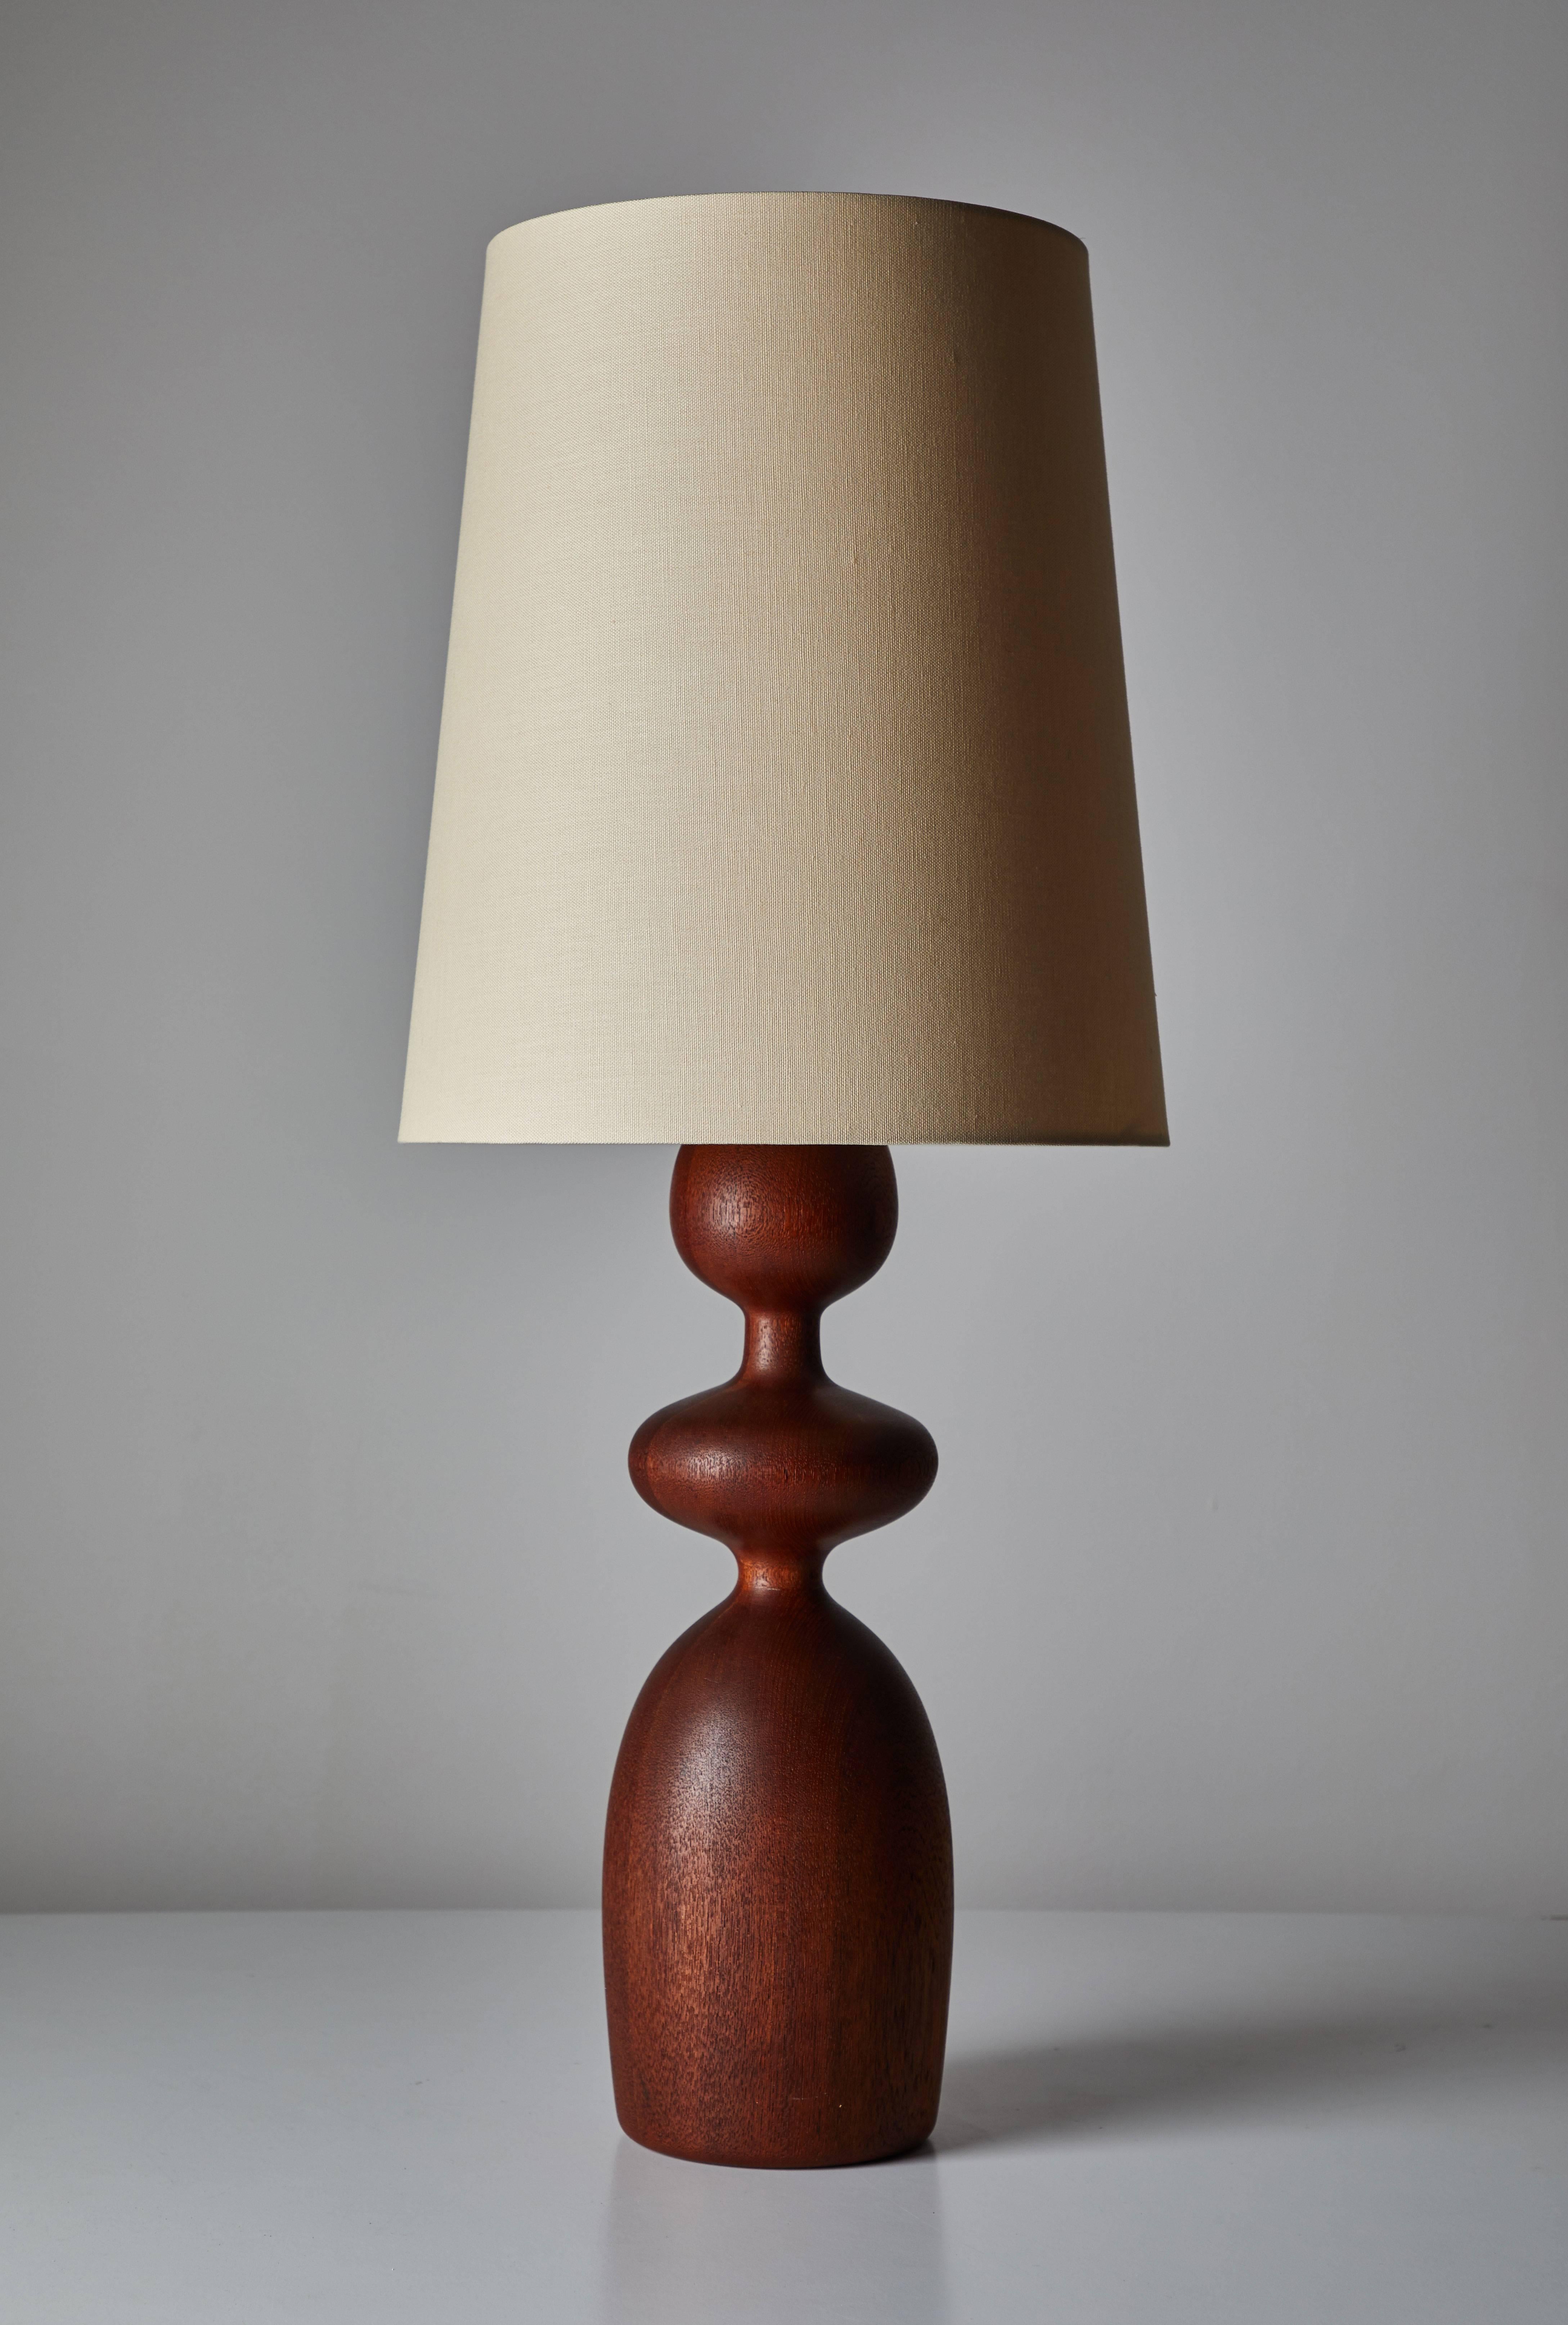 Mid-20th Century Sculpted Teak Danish Table Lamp